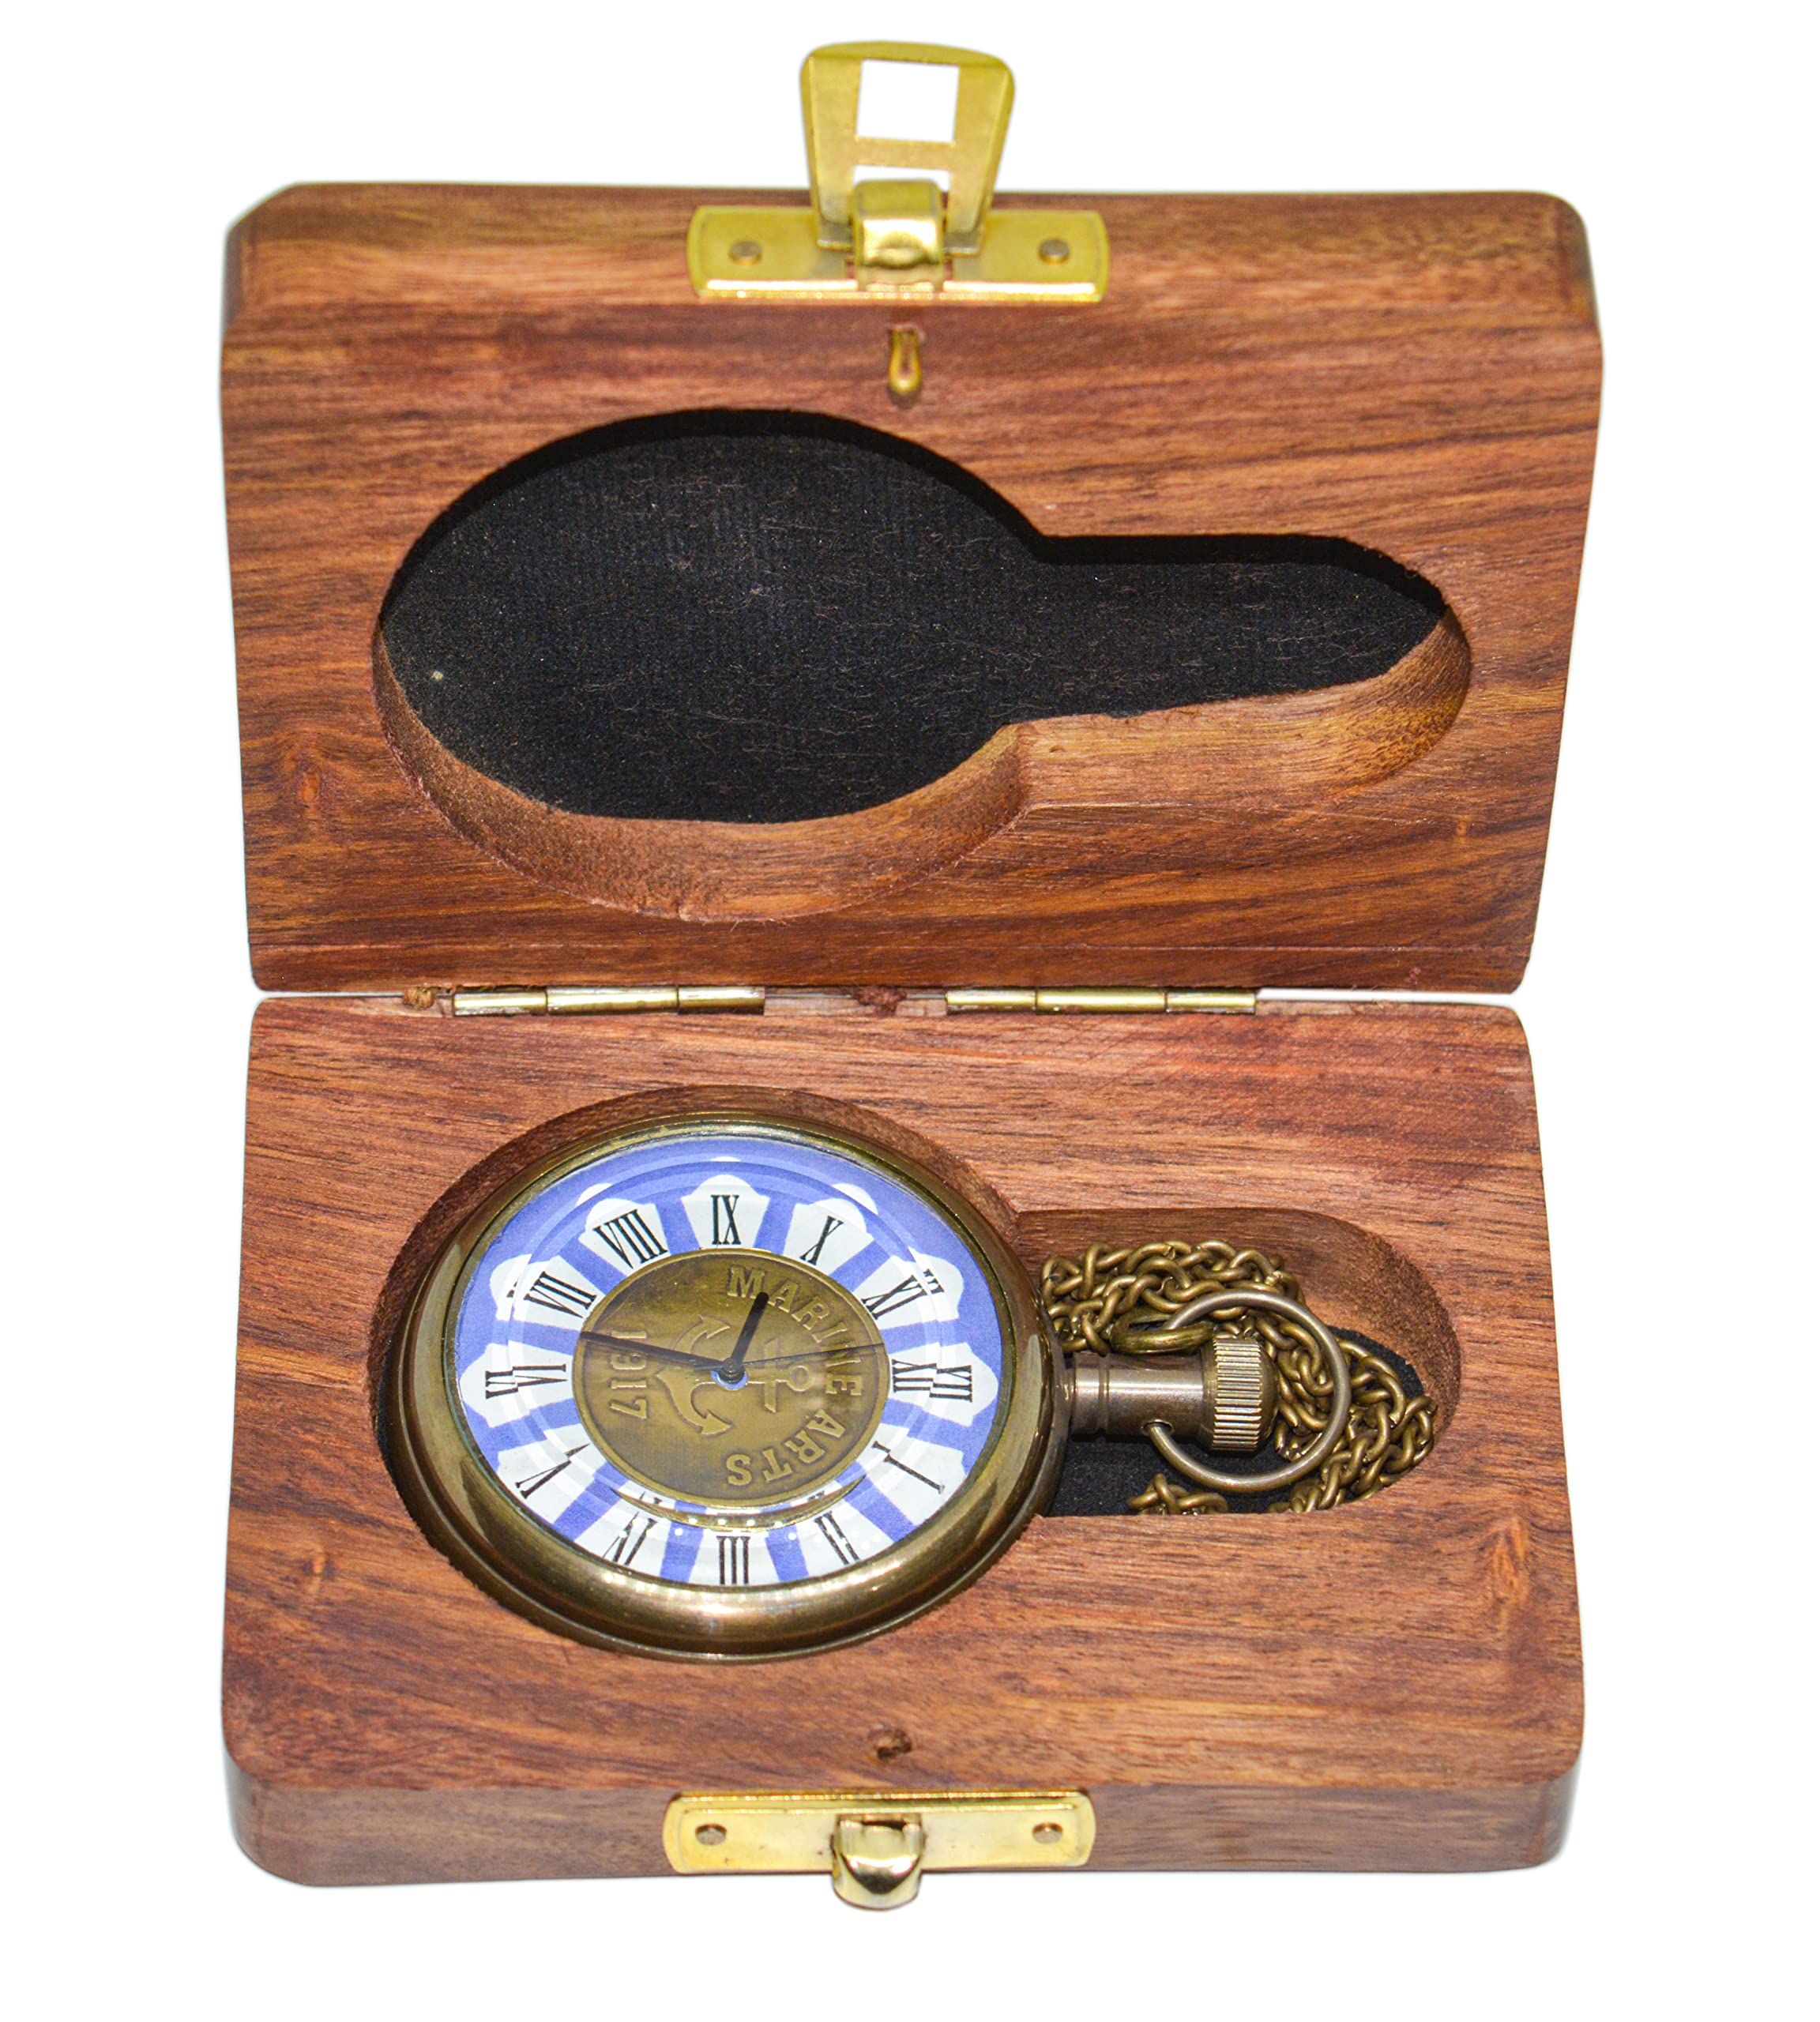 Hassanhandicrafts Antique Vintage Maritime Marine Art Brass Pocket Watch Fob Chronometer with Wooden Box